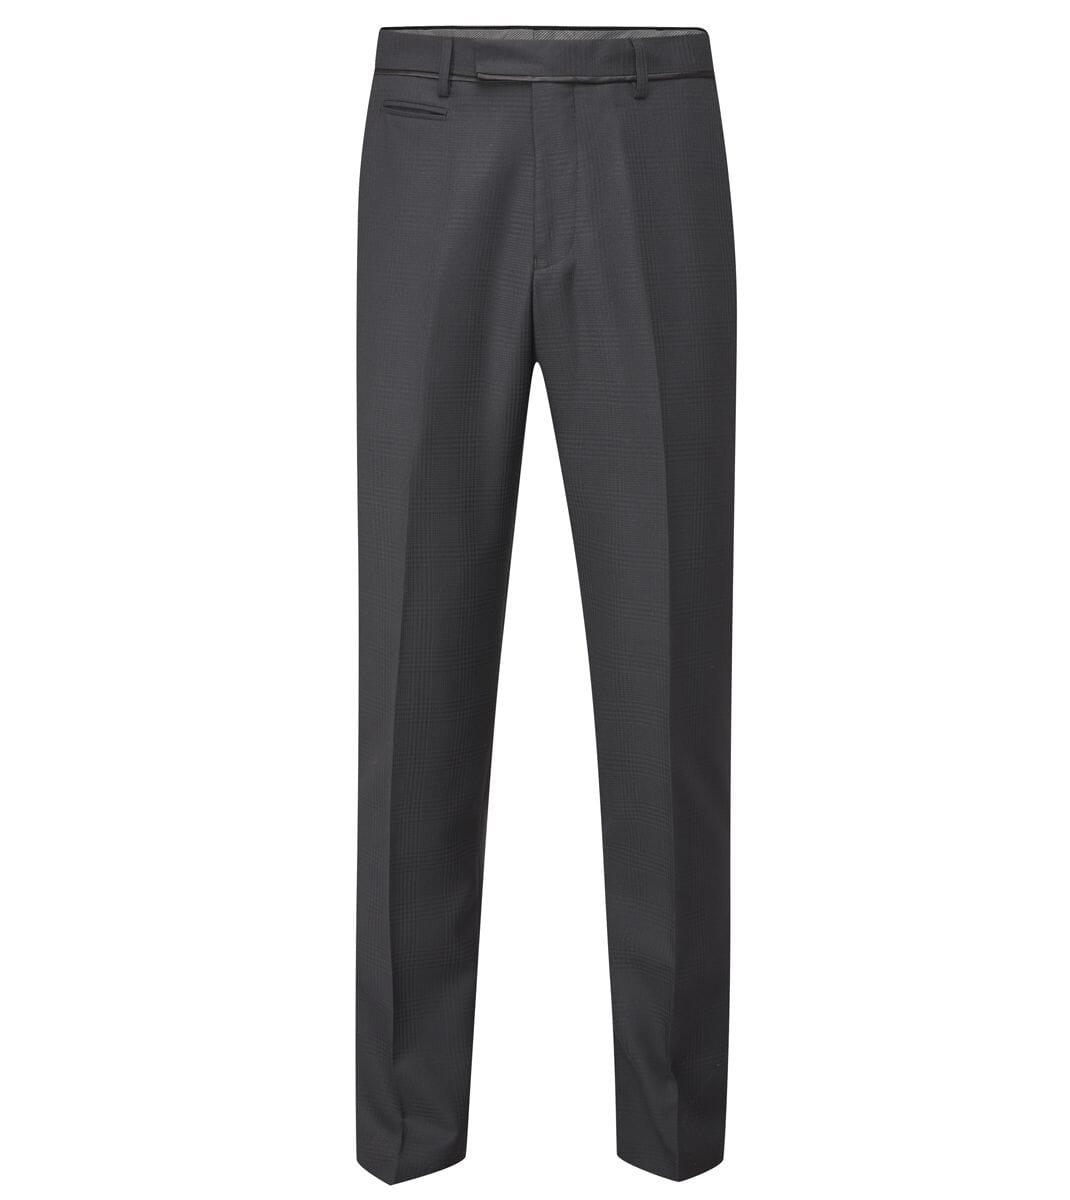 Newman Black Check 3 Piece Dinner Suit - Suits - - THREADPEPPER